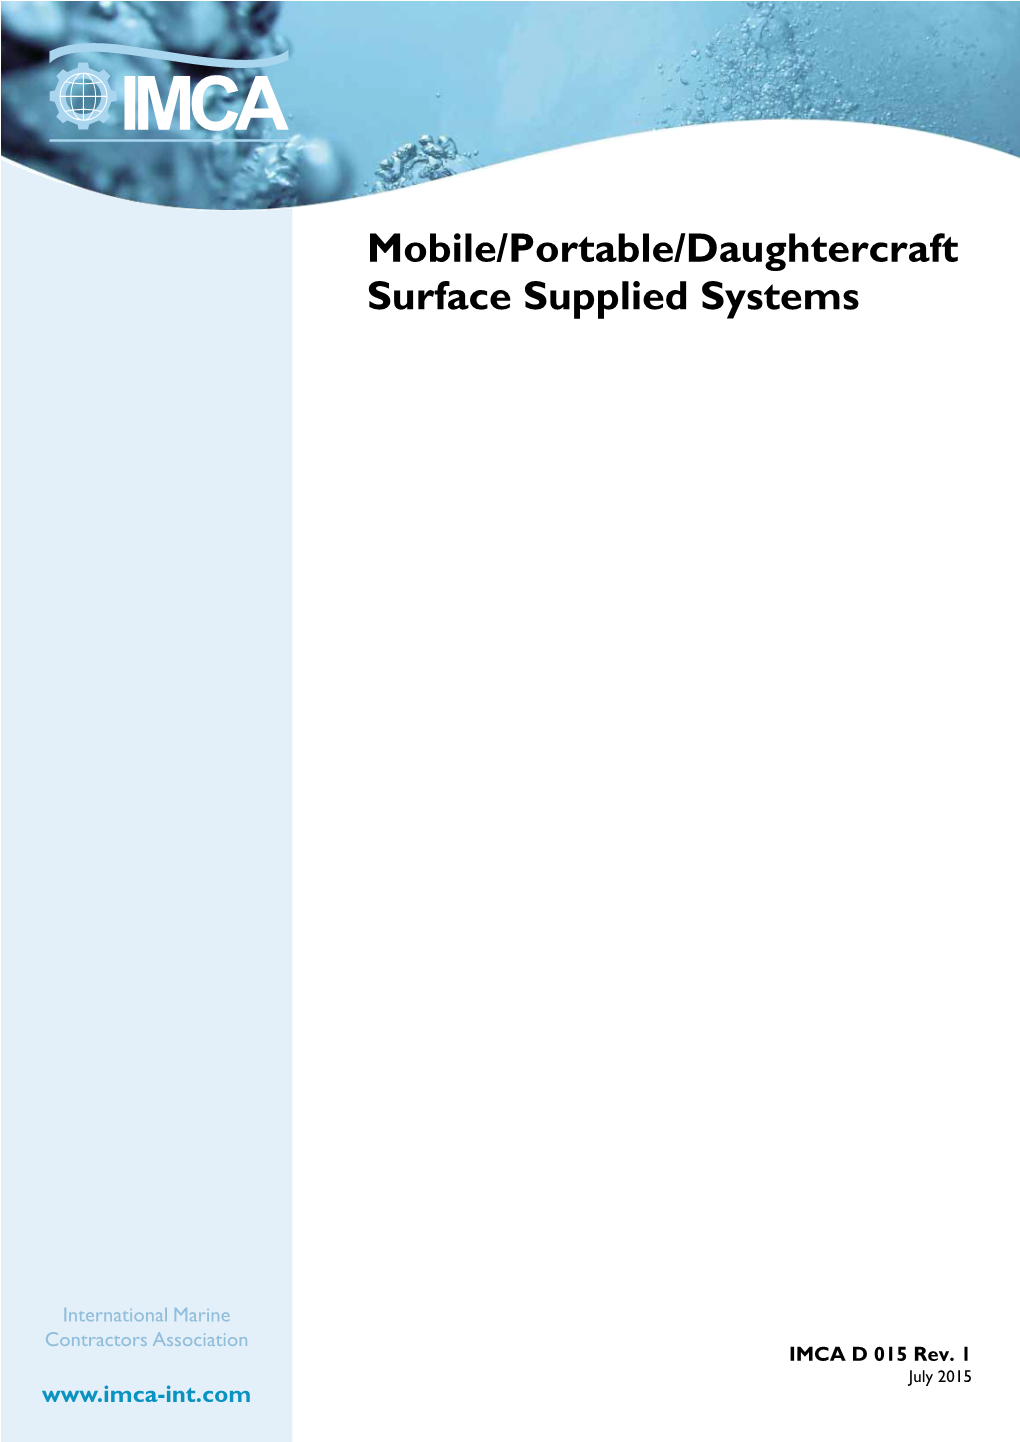 IMCA D015 . Mobile Portable Daughtercraft Surface Supplied